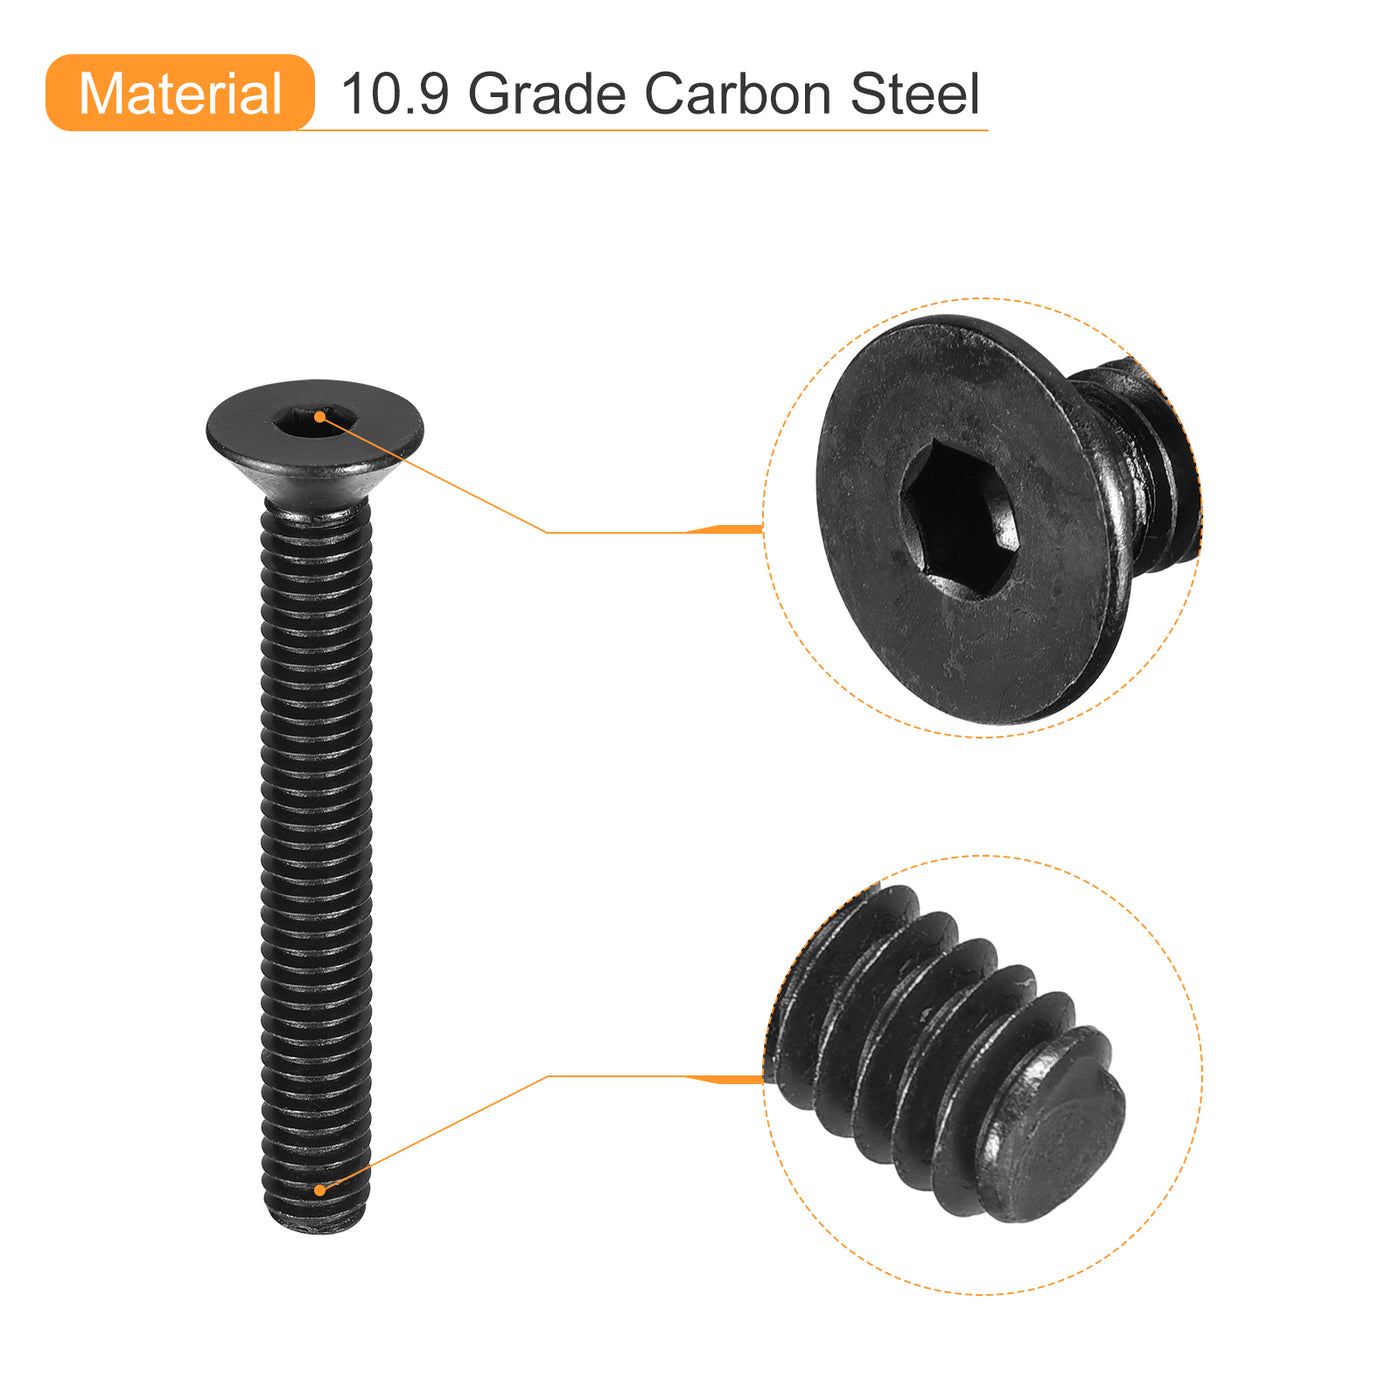 uxcell Uxcell 5/16-18x3" Flat Head Socket Cap Screws, 10.9 Grade Carbon Steel, 10PCS